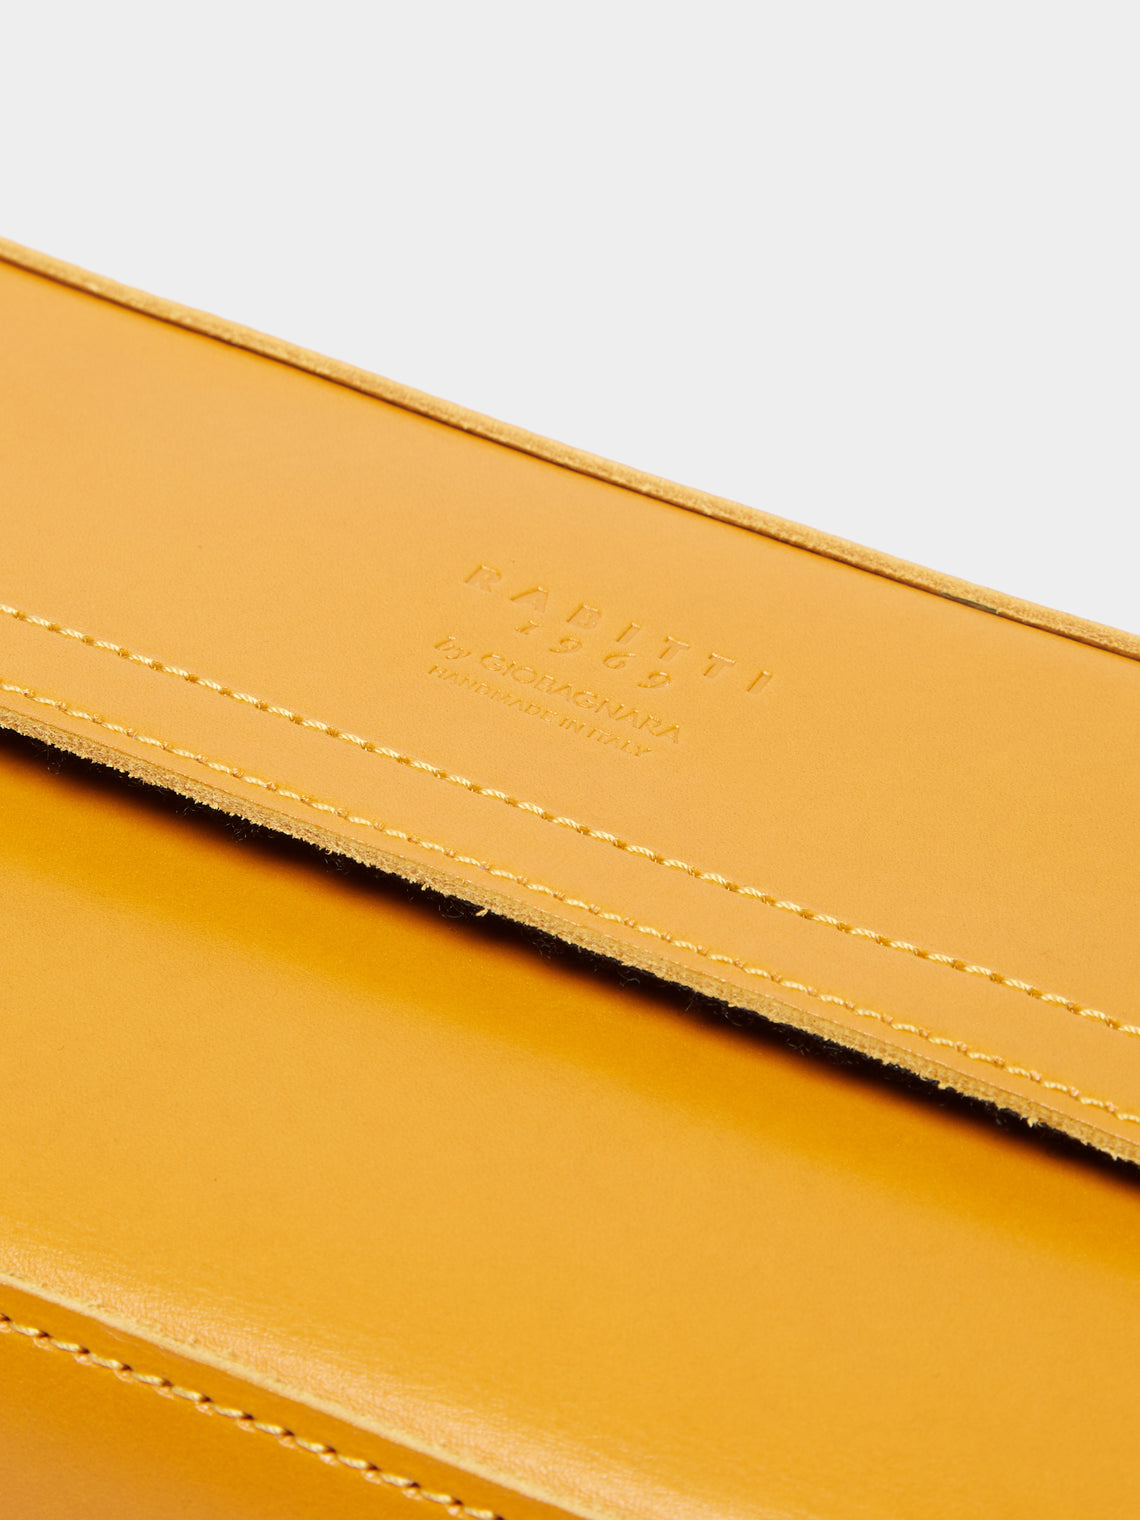 Rabitti 1969 - Amsterdam Leather Tissue Box - Yellow - ABASK